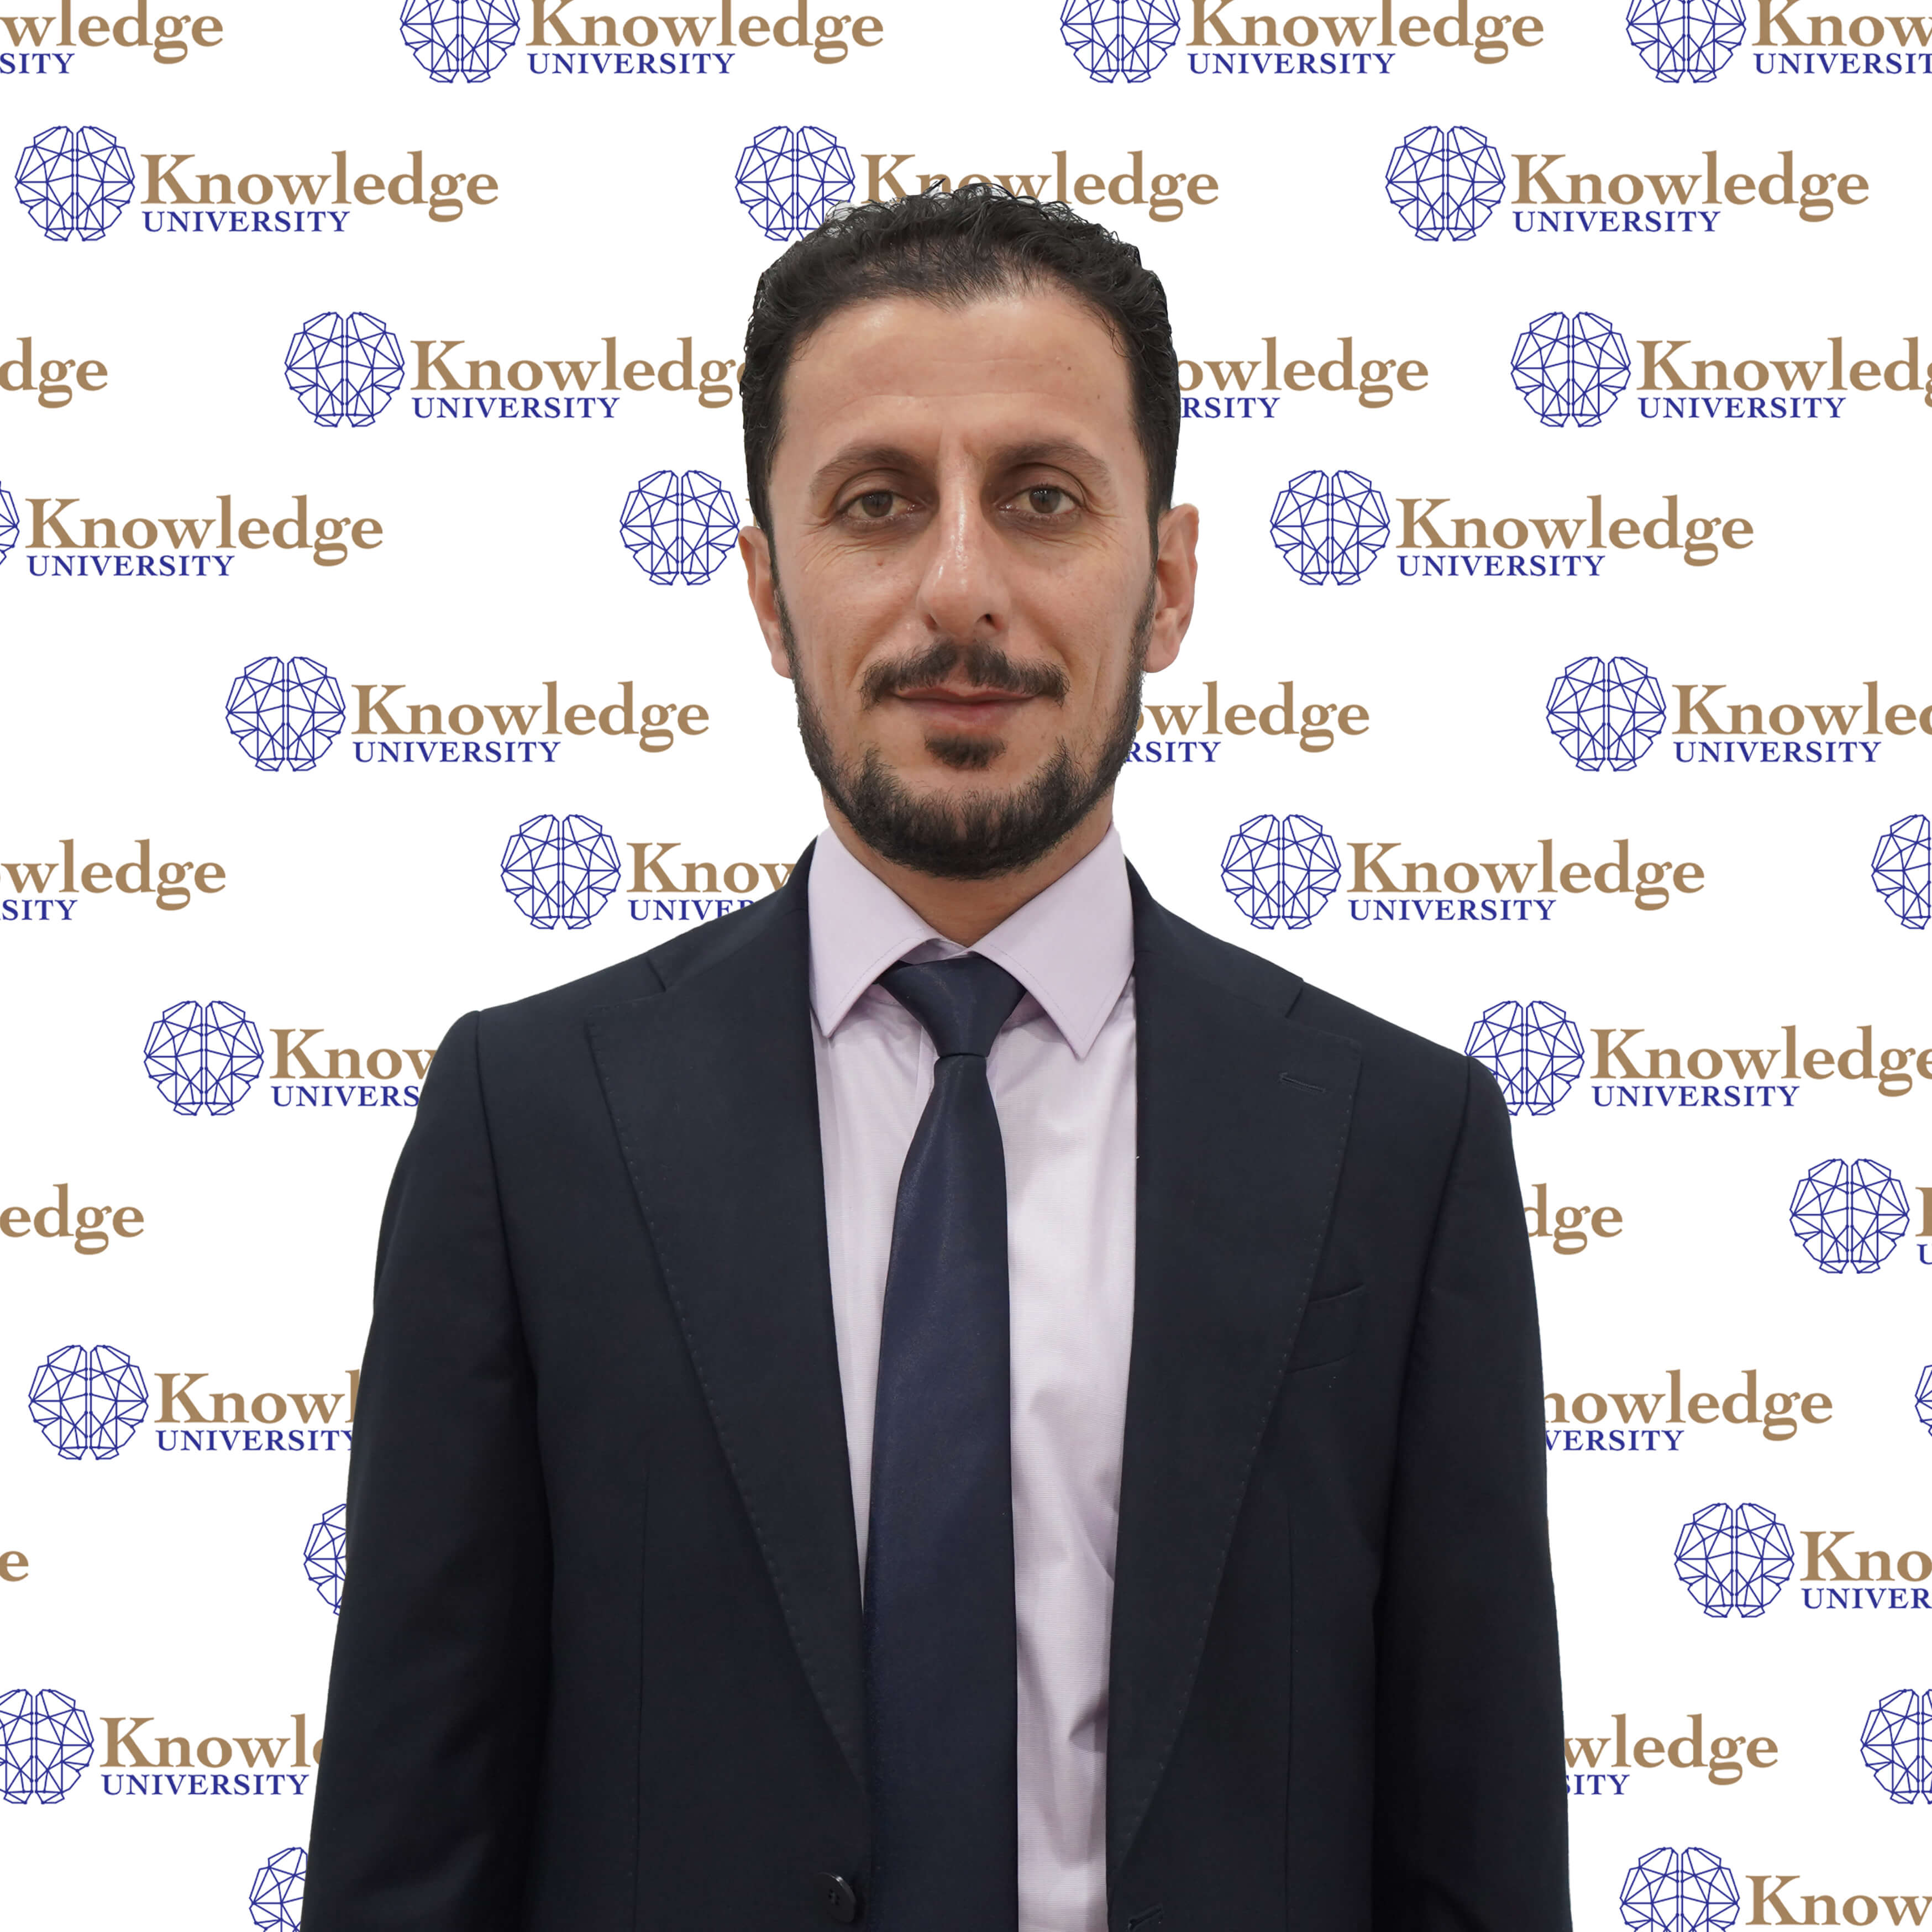 Abdulrahman Smail Ibrahim,Teacher Portfolio Staff at Knowledge